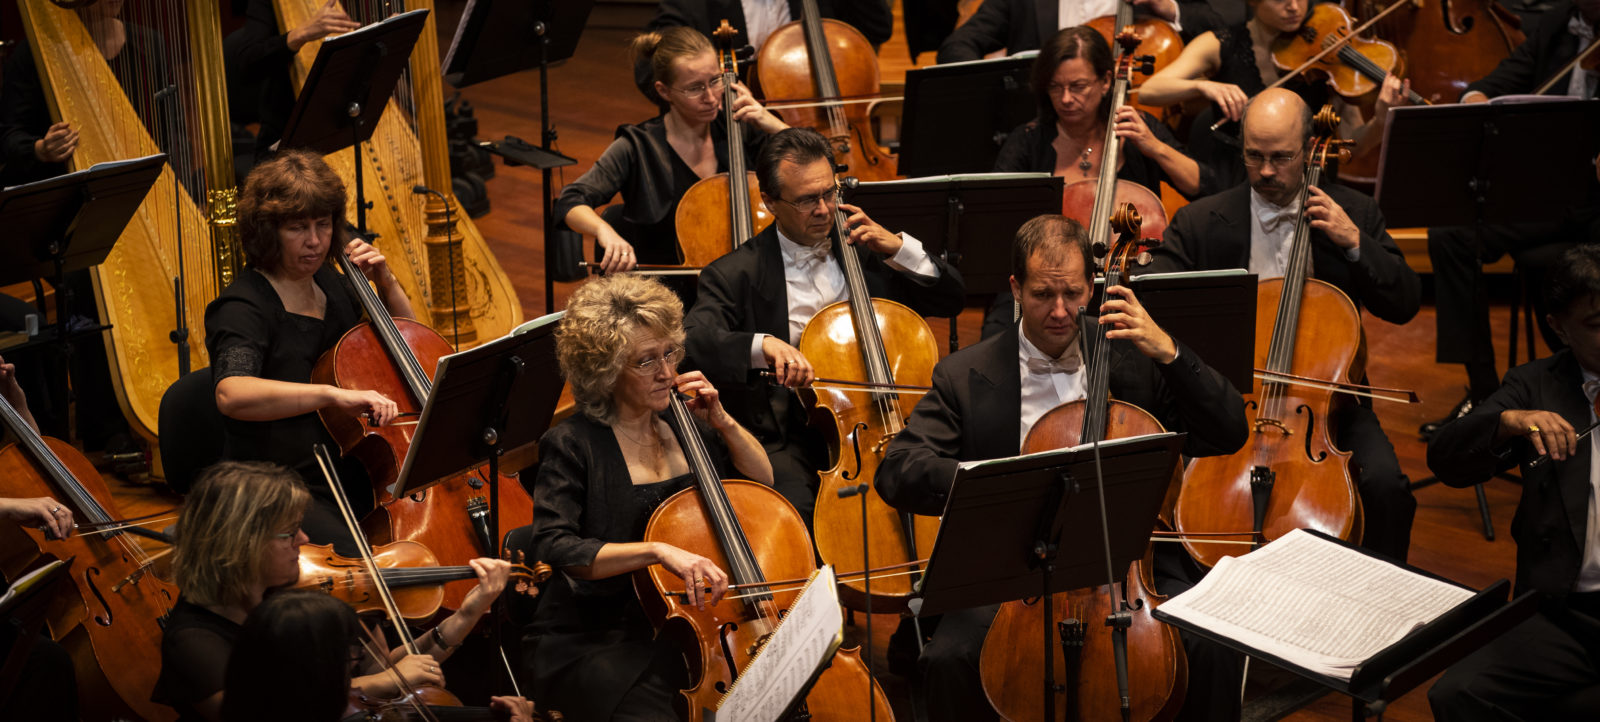 Apa és fia – a Nemzeti Filharmonikus Zenekar koncertje